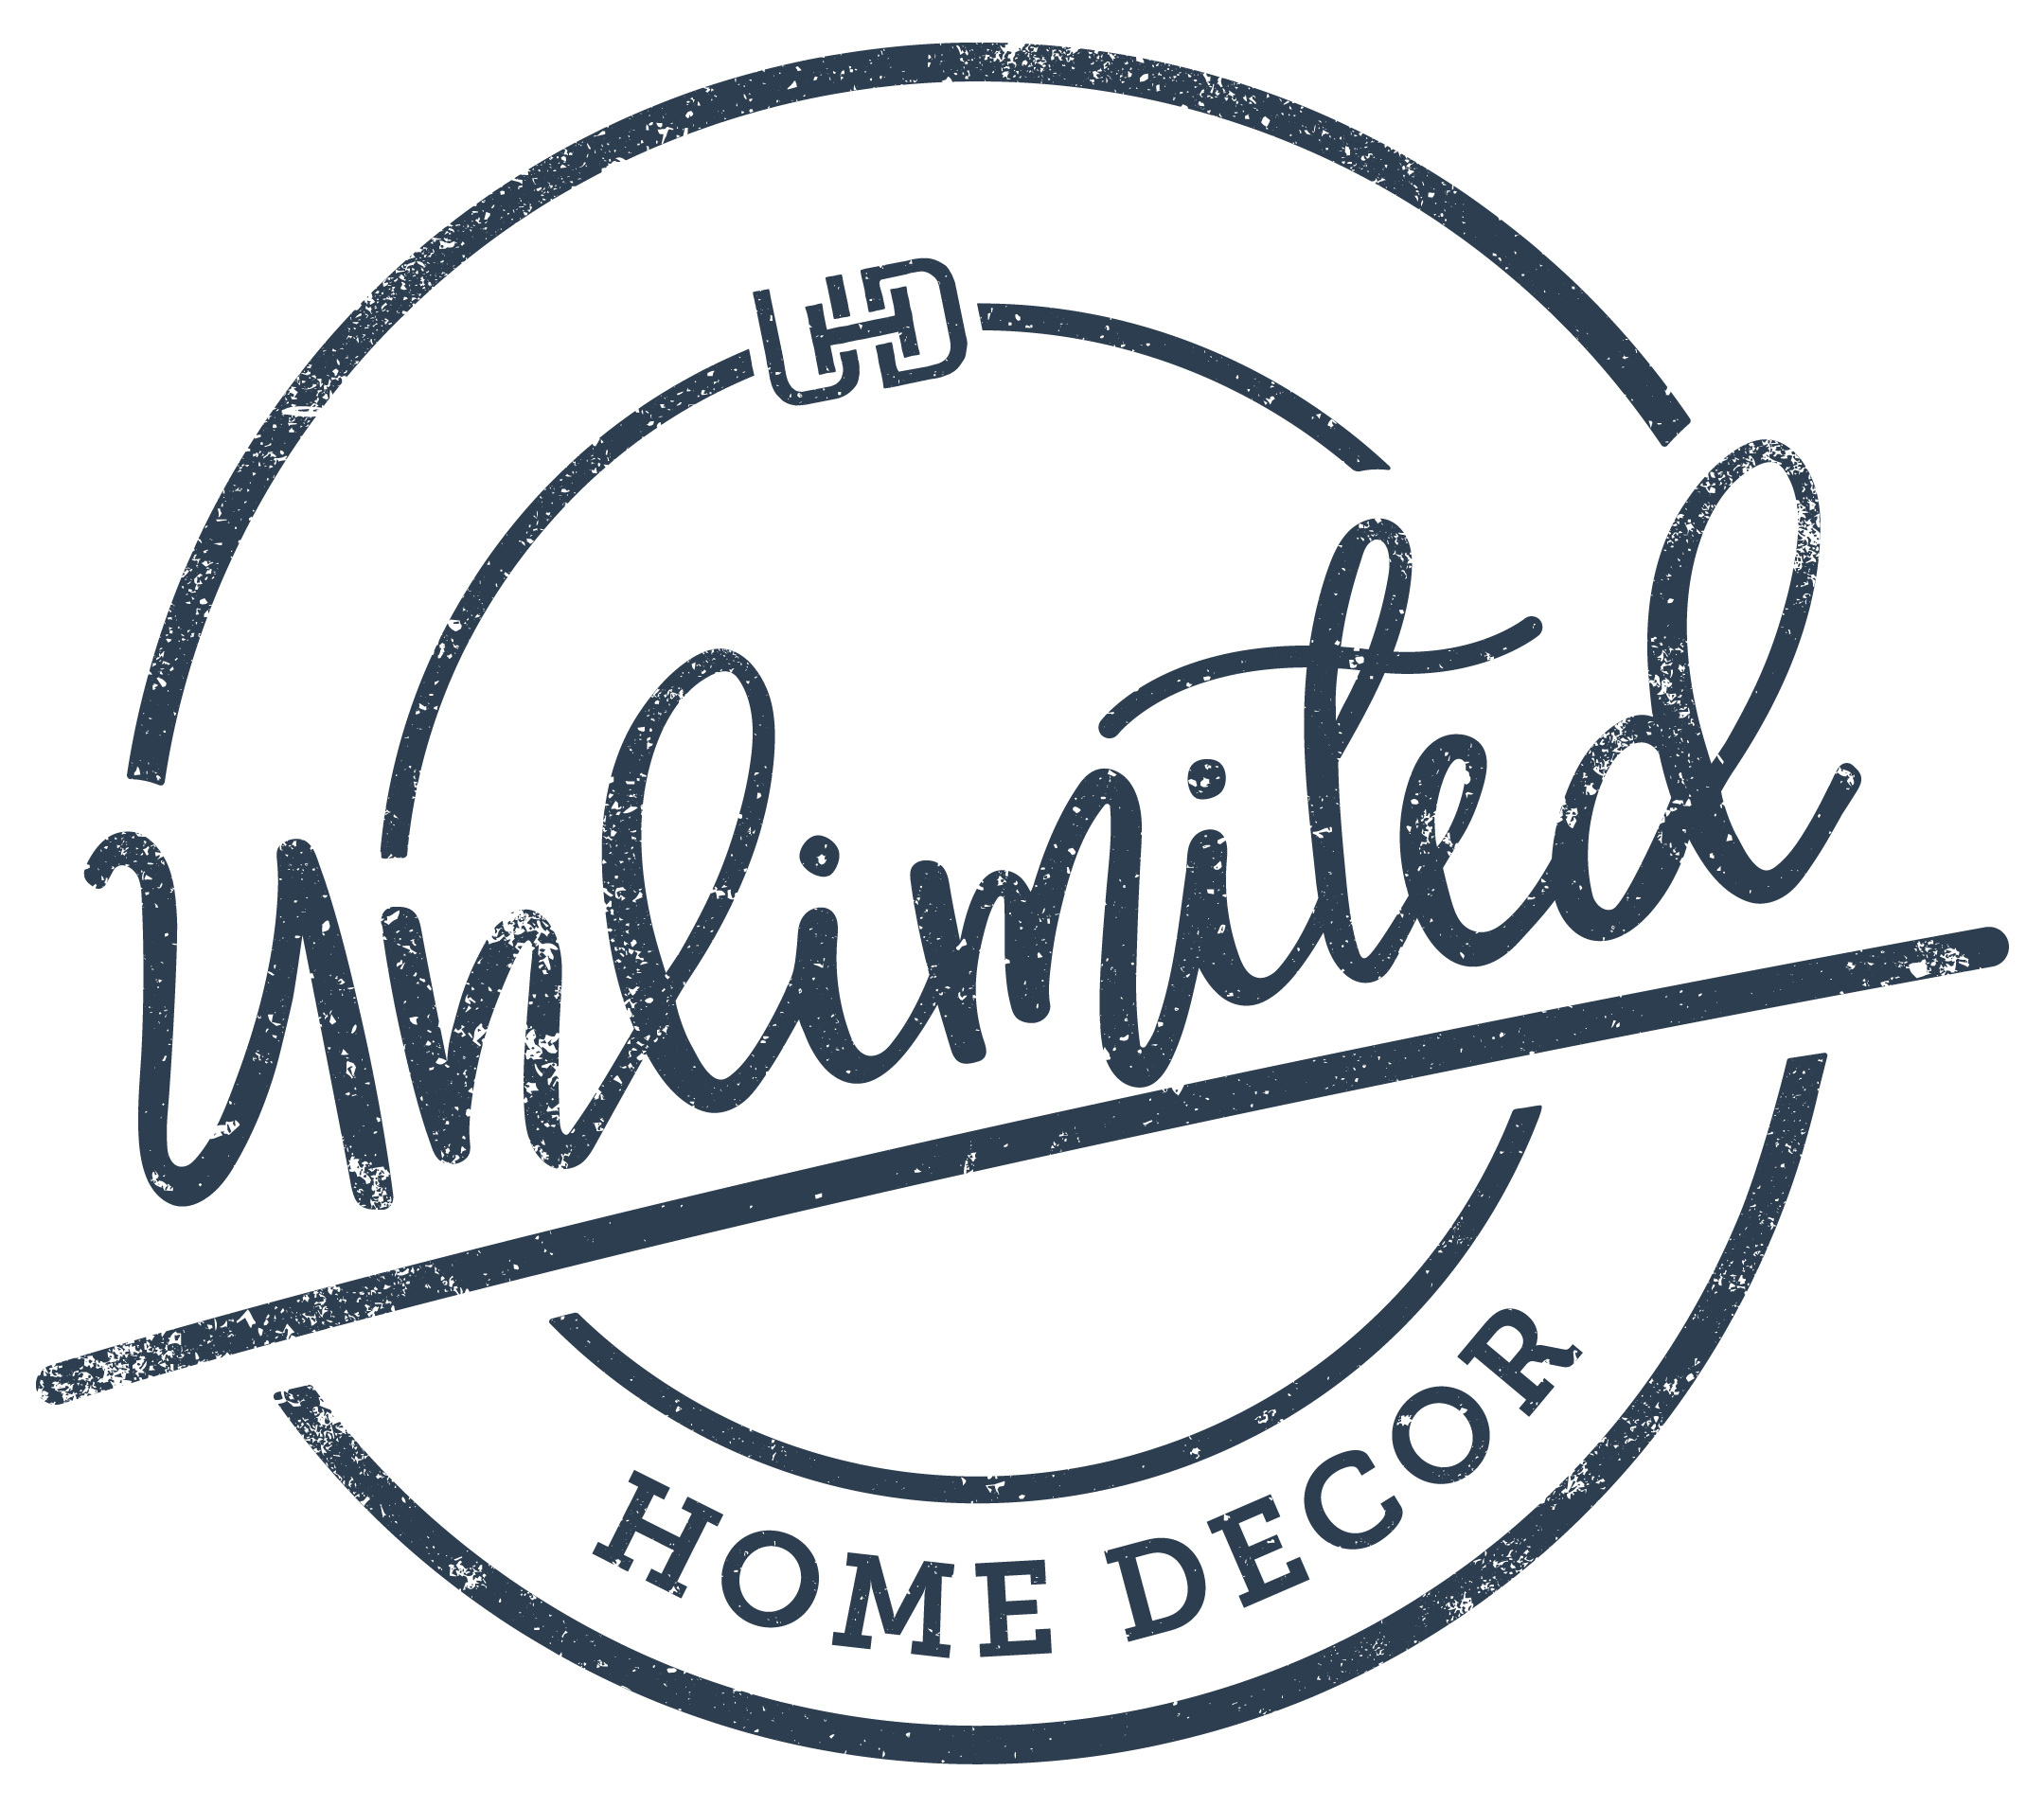 Unlimited Home Decor